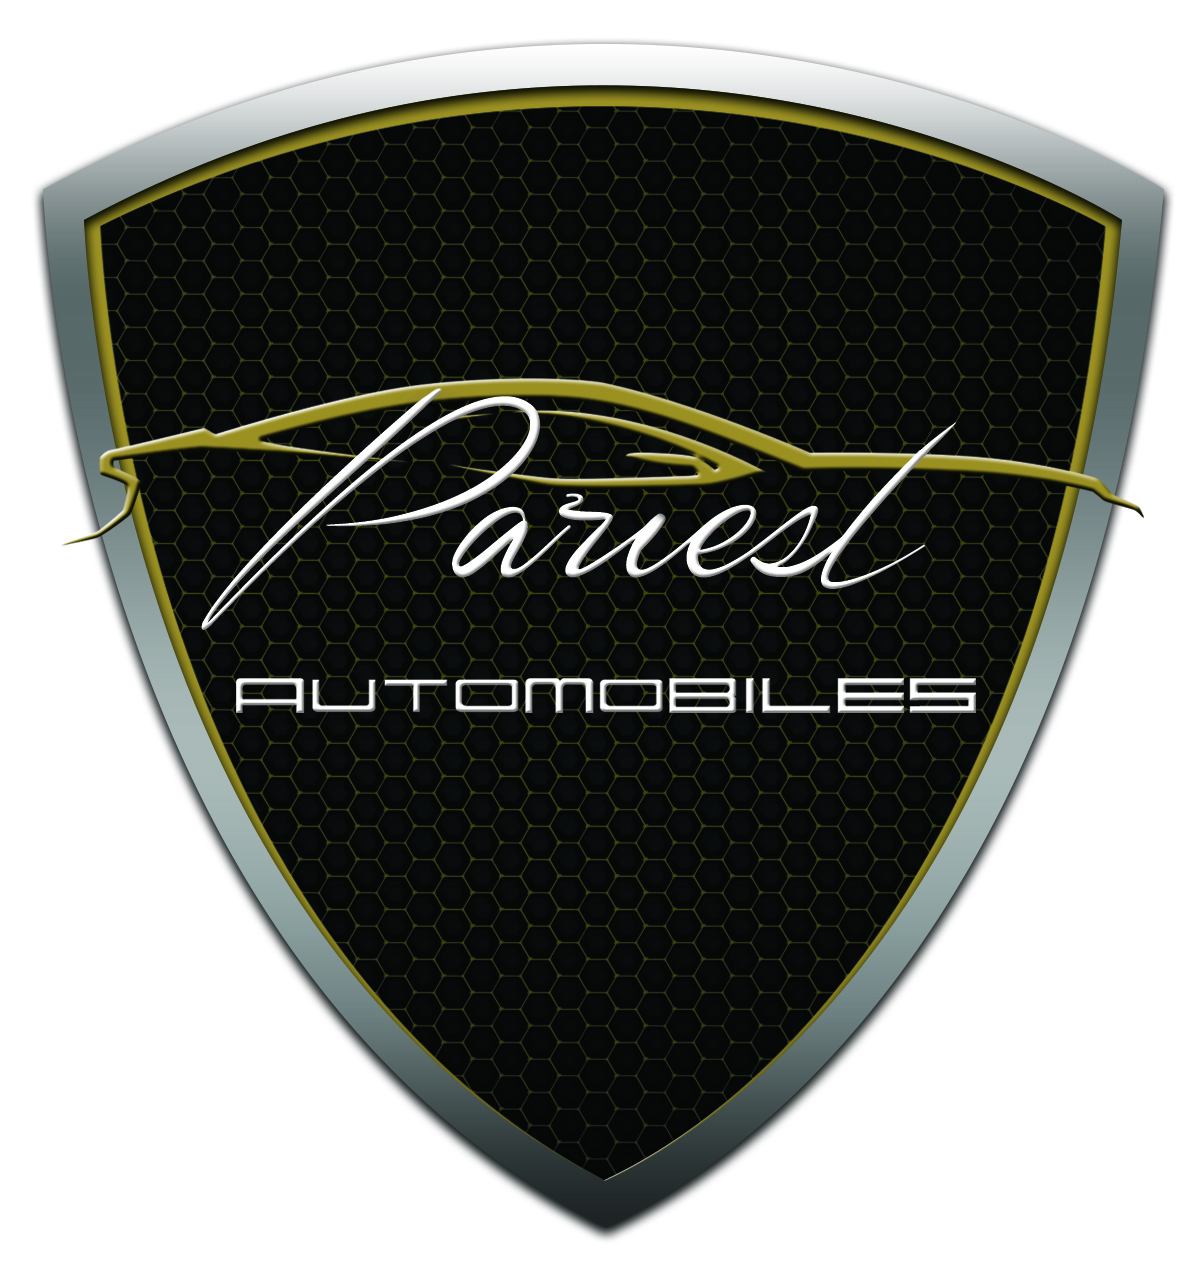 PARIEST AUTOMOBILES logo